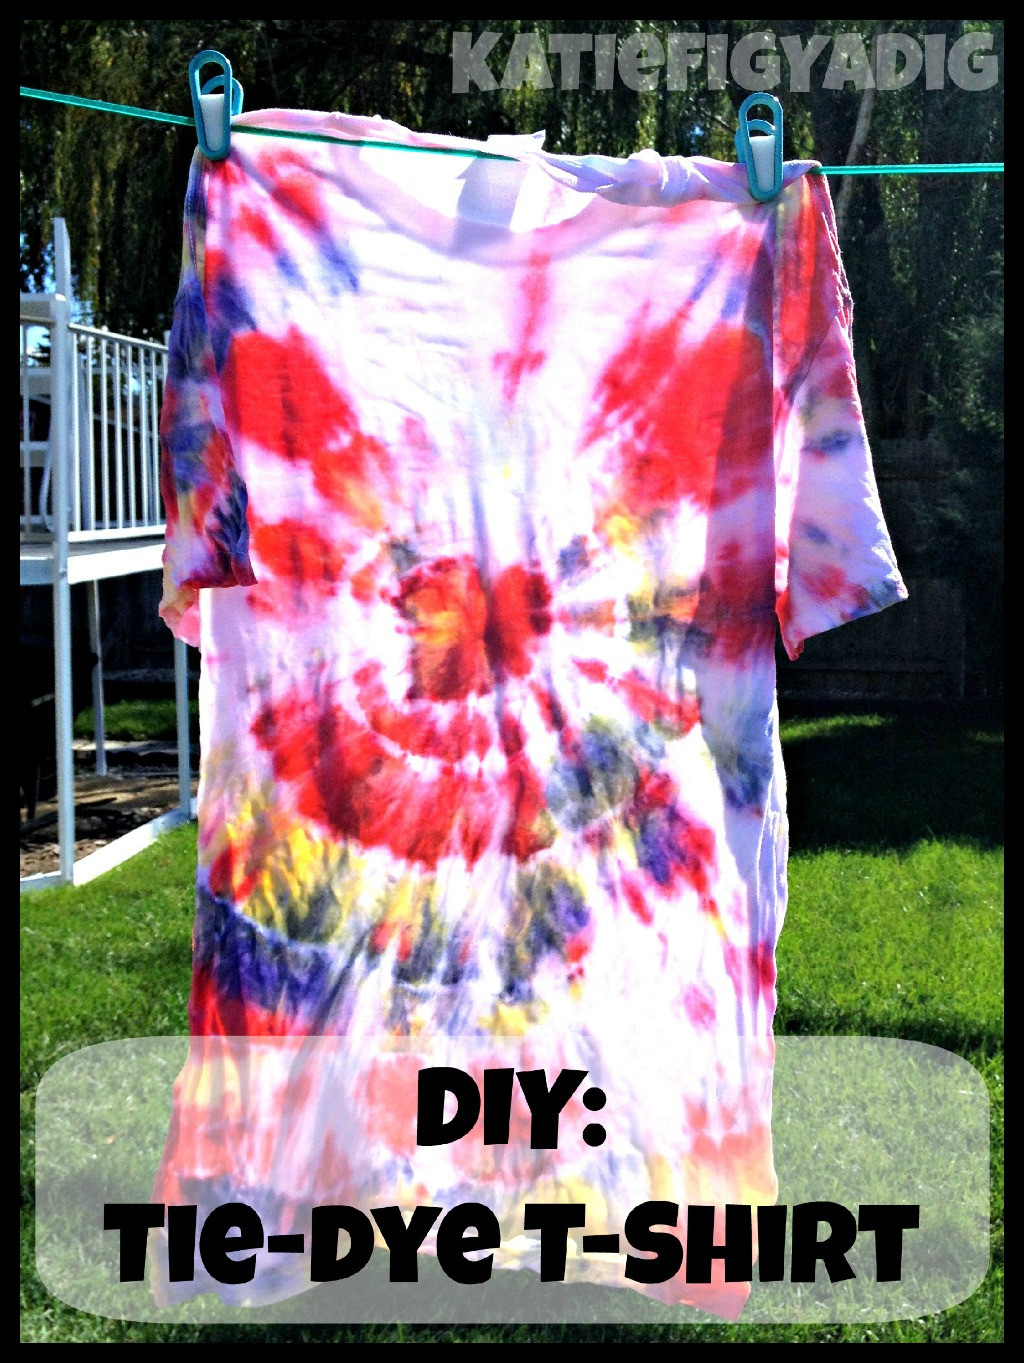 Best ideas about DIY Tie Dye
. Save or Pin DIY Tie Dye T Shirt Now.